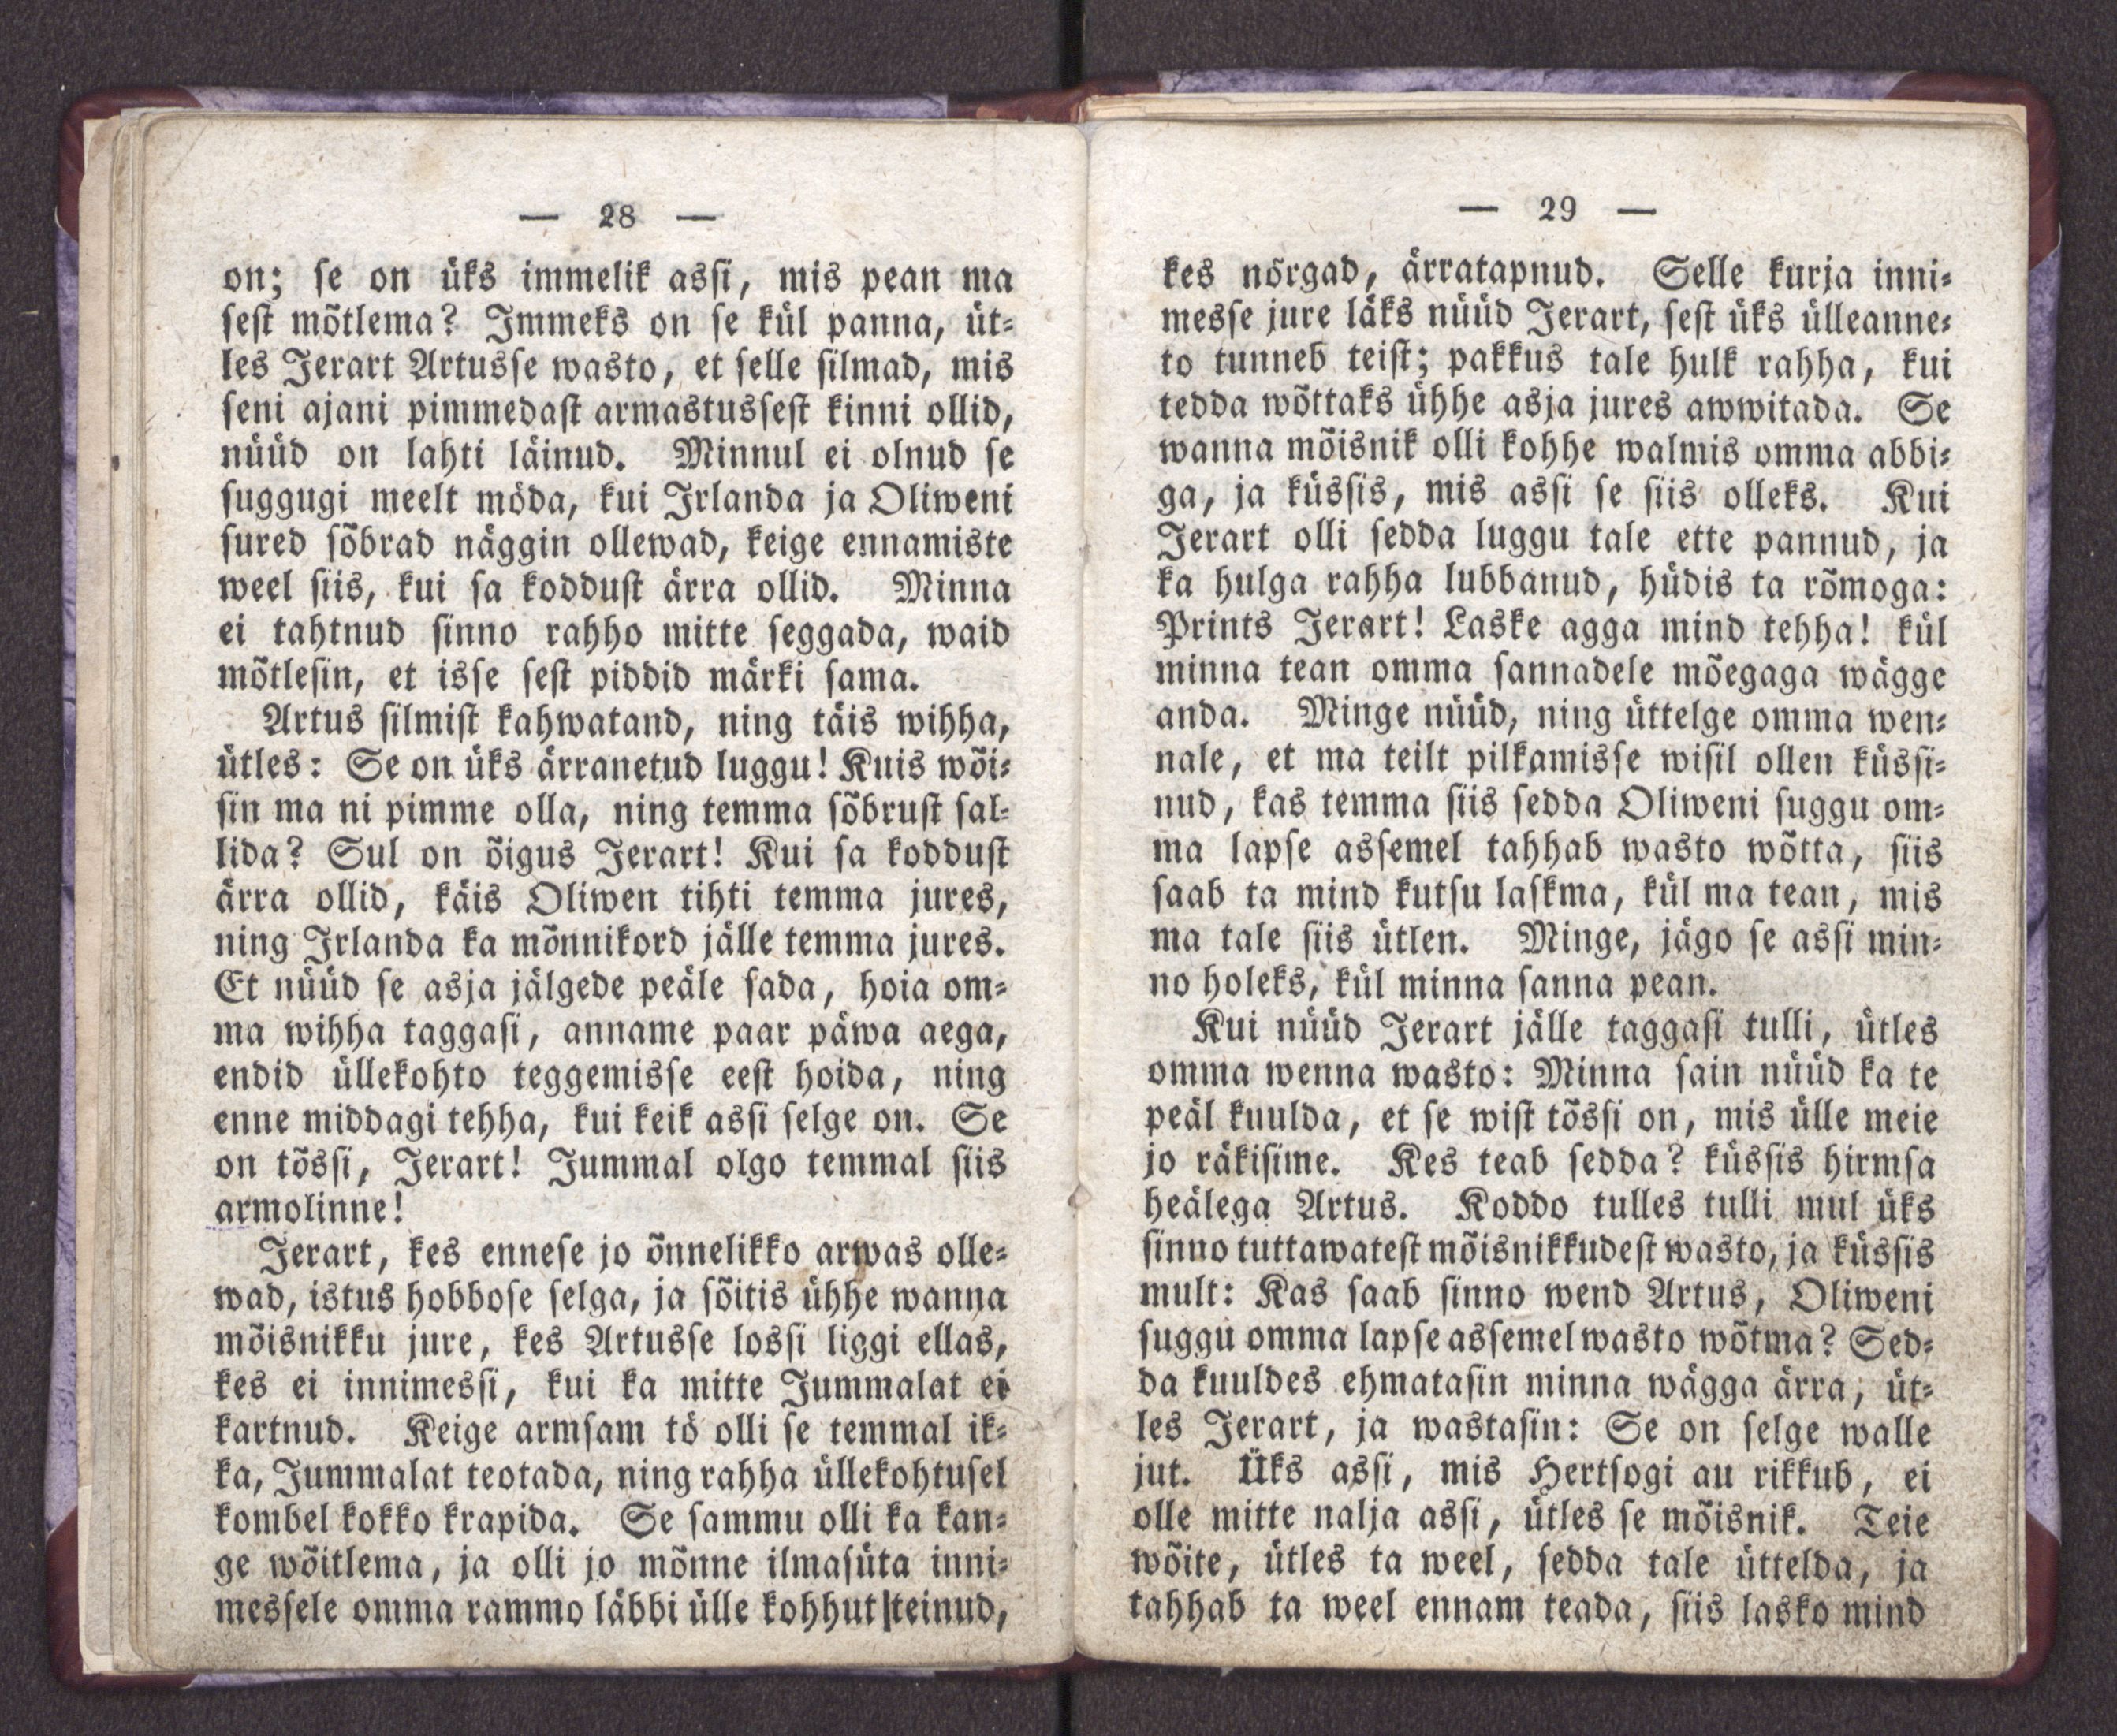 Irlanda, ehk puhta ello wõit (1844) | 15. (28-29) Main body of text